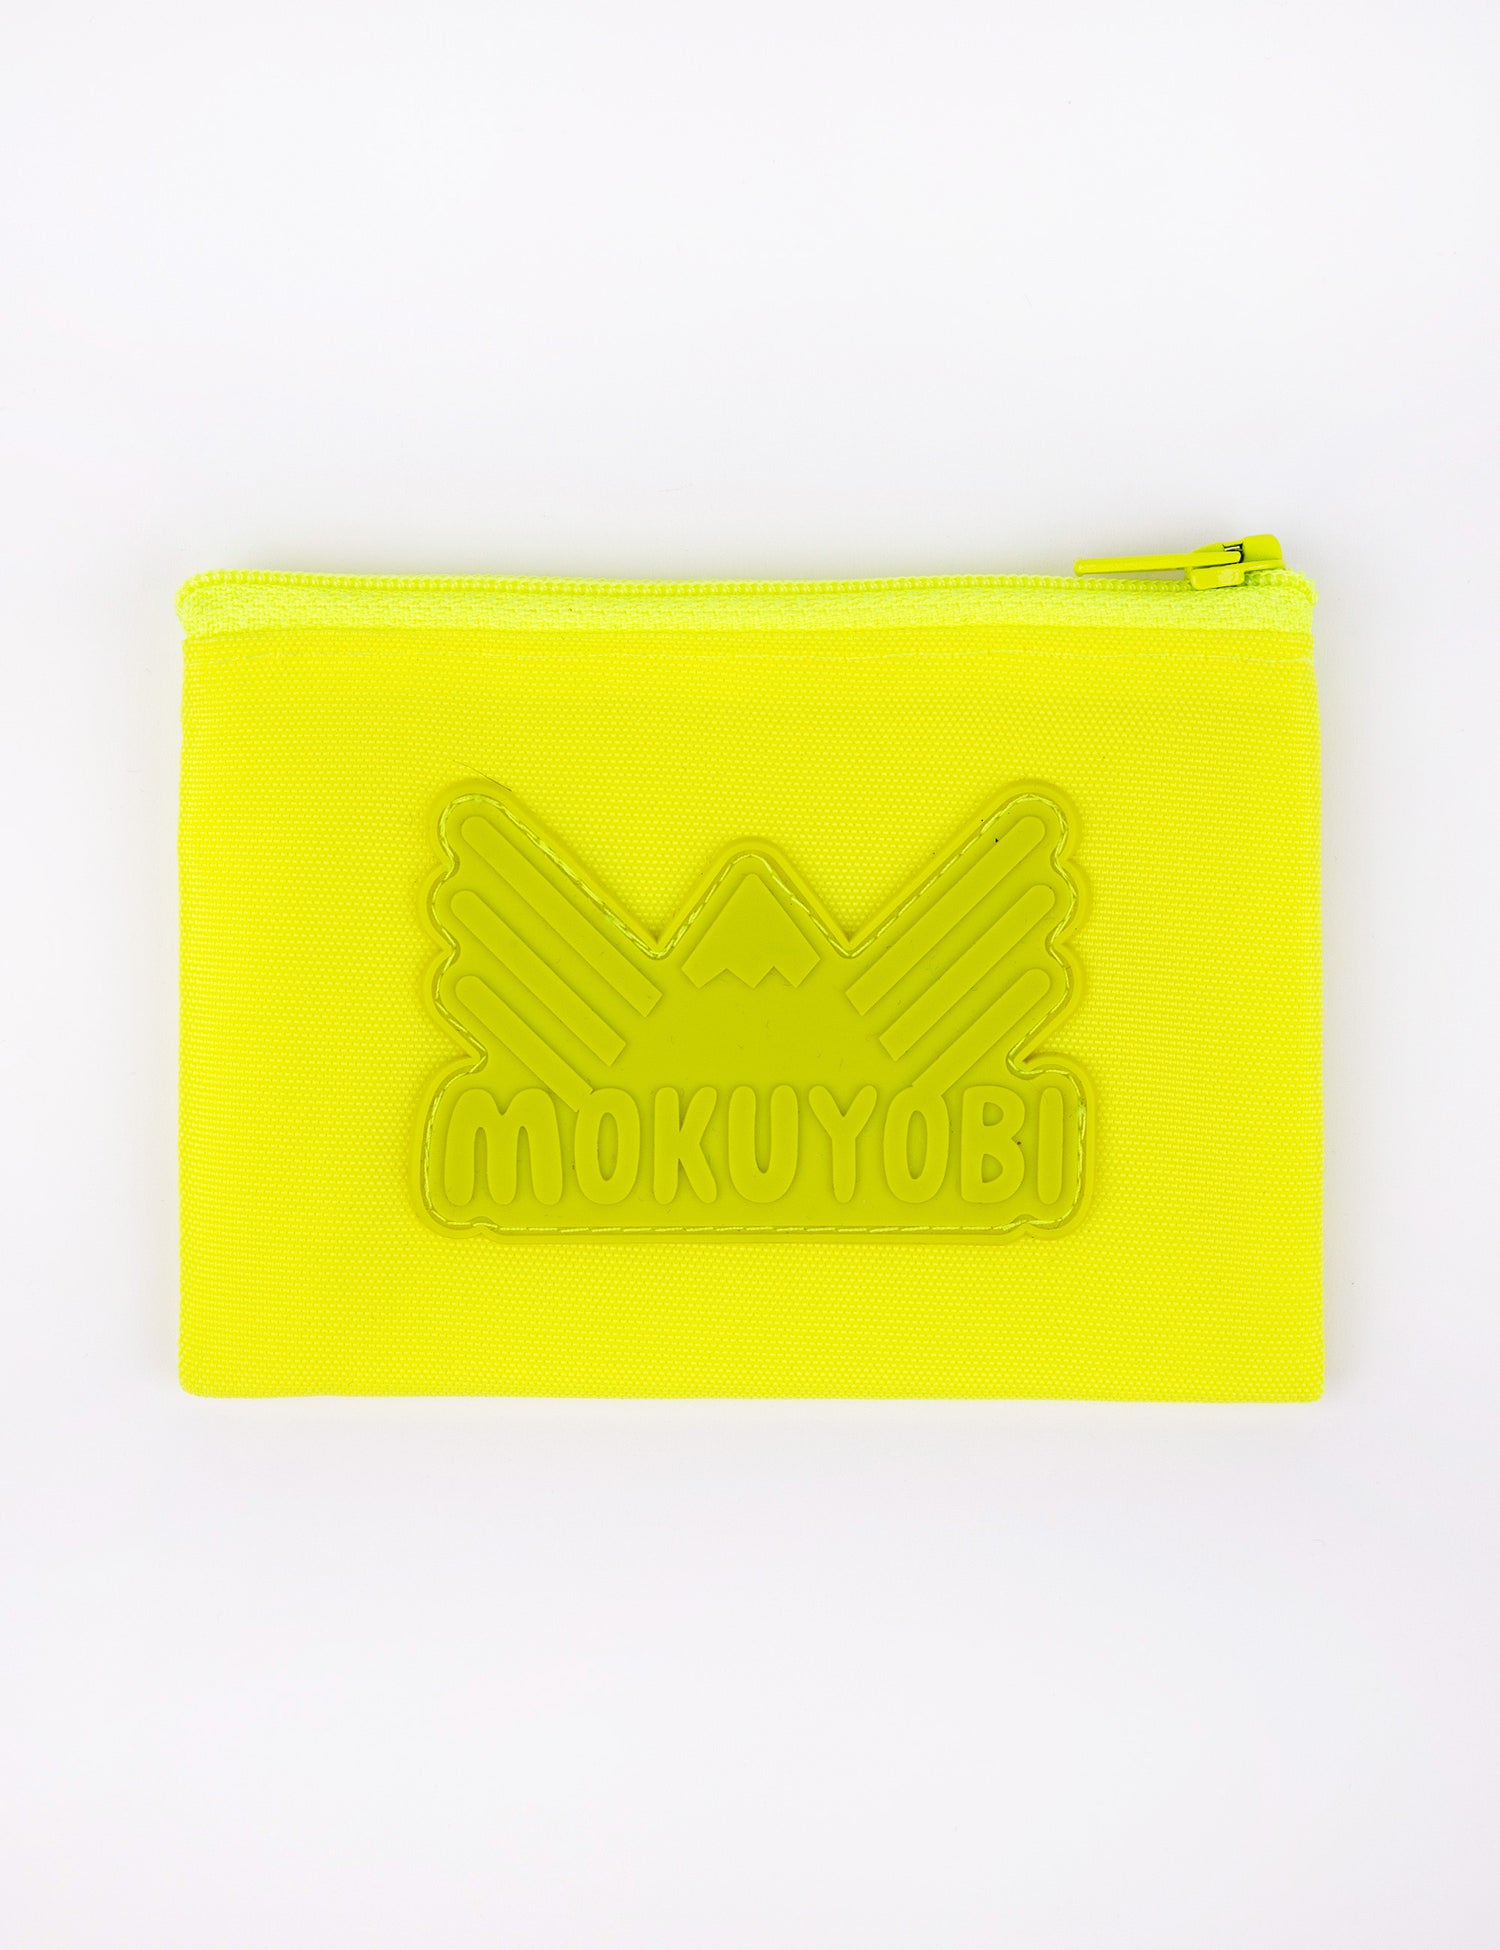 Small coin pouch with Mokuyobi logo in neon yellow